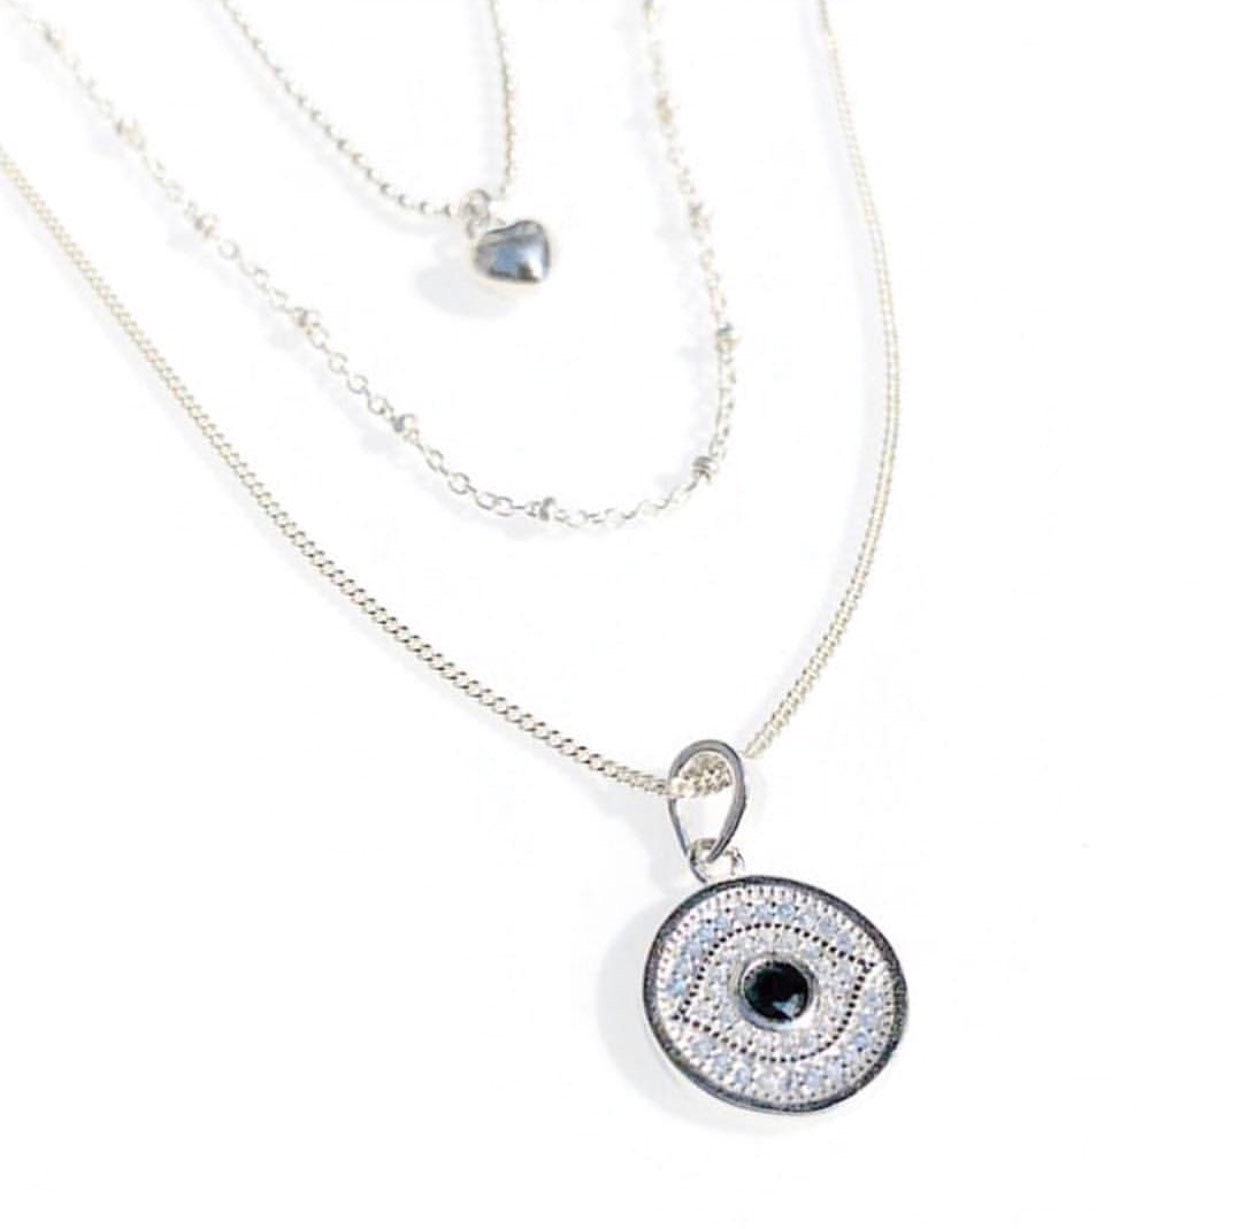 Petite evil eye medallion necklace (sterling silver)